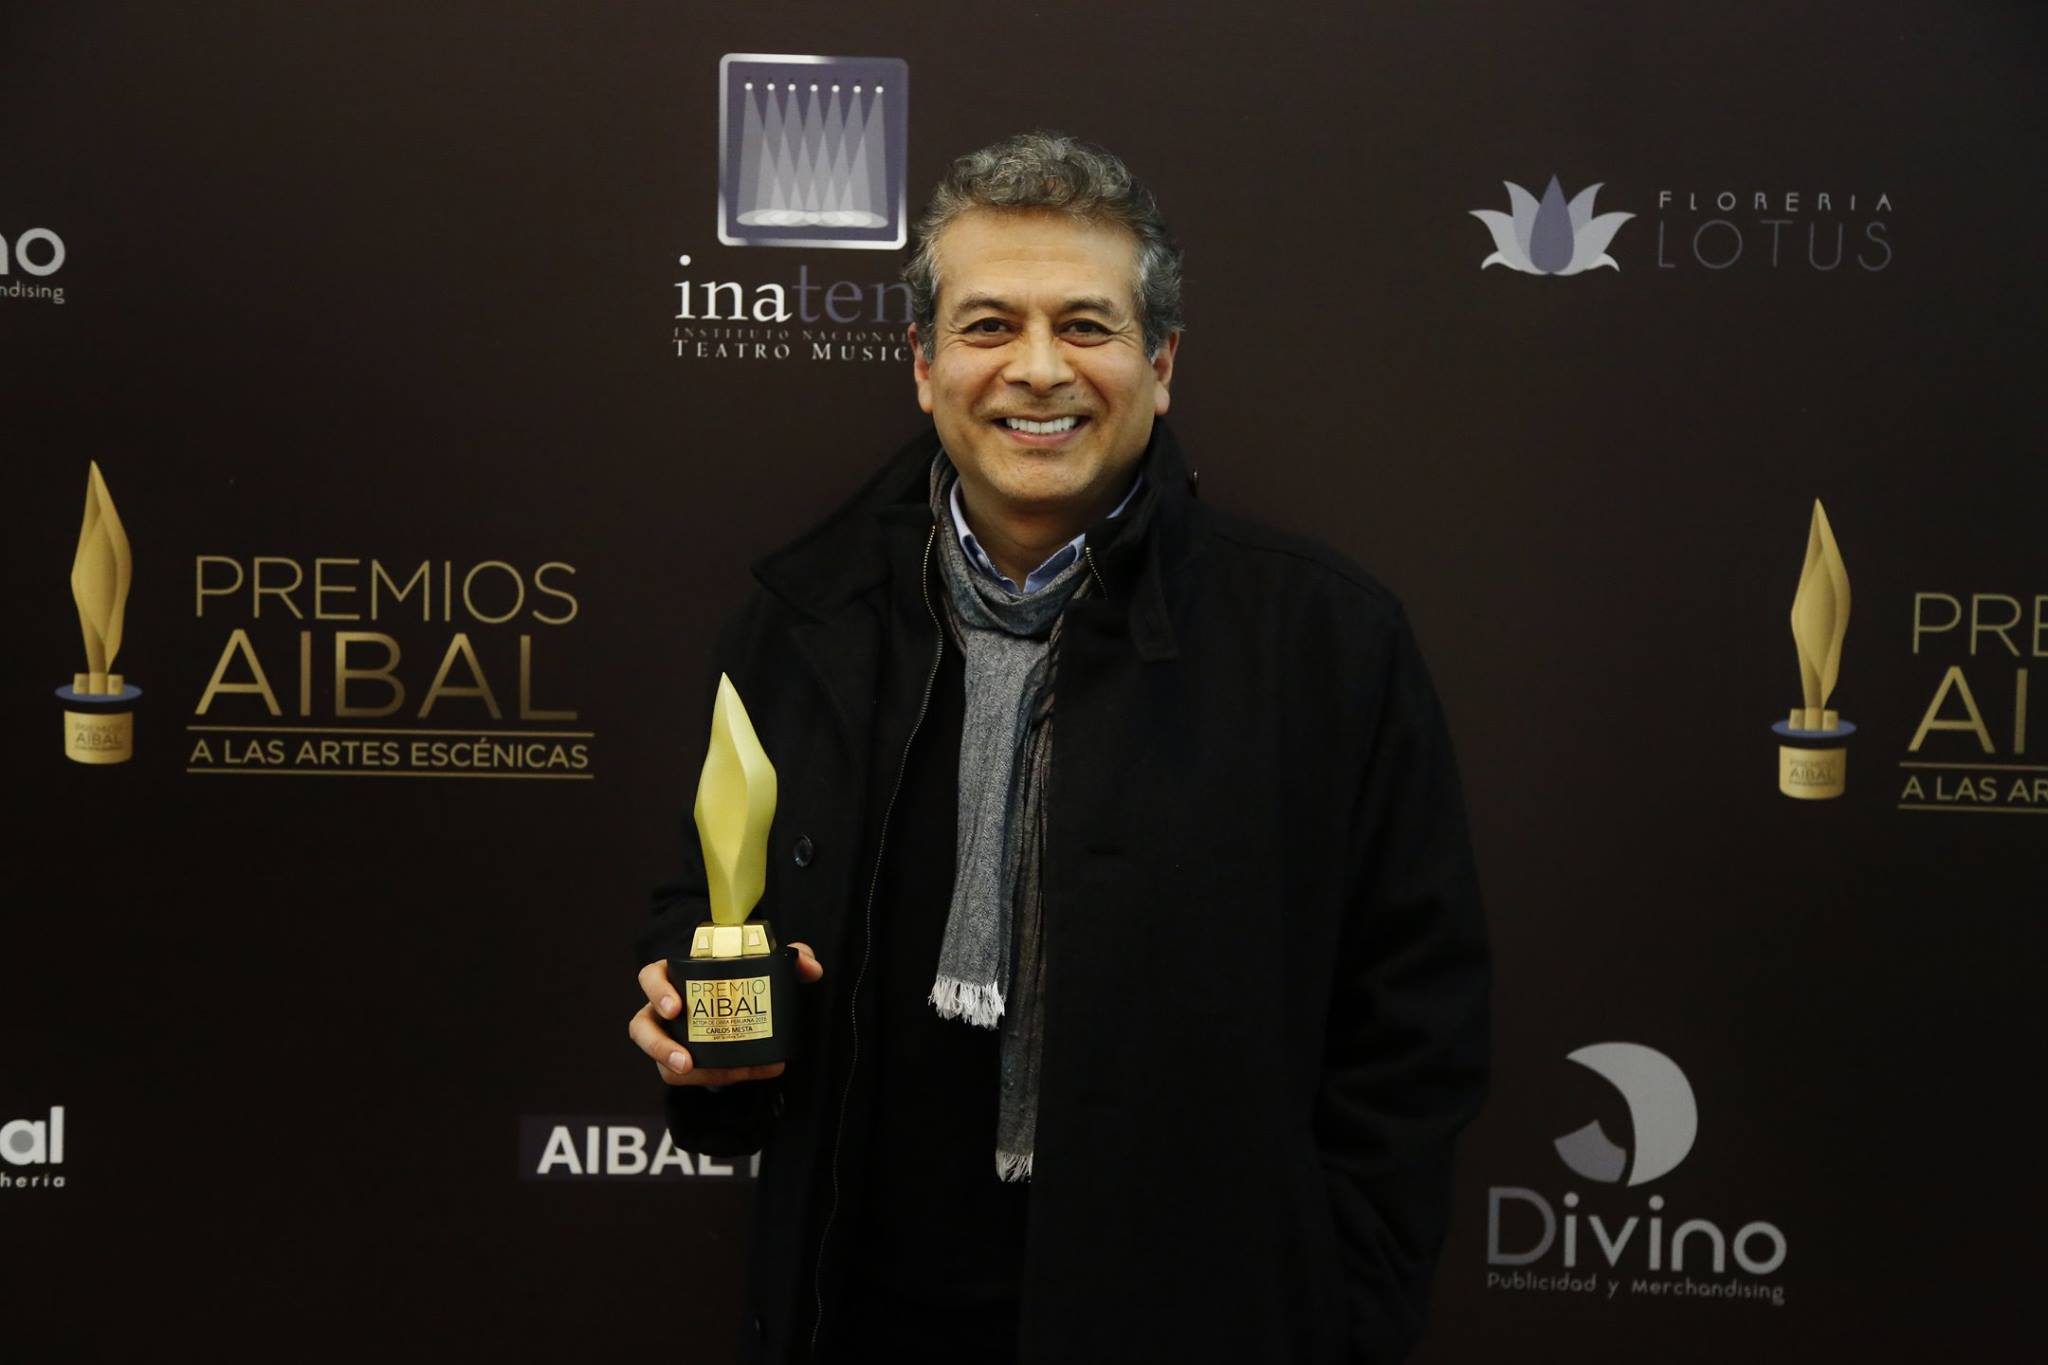 Premios AIBAL 2016